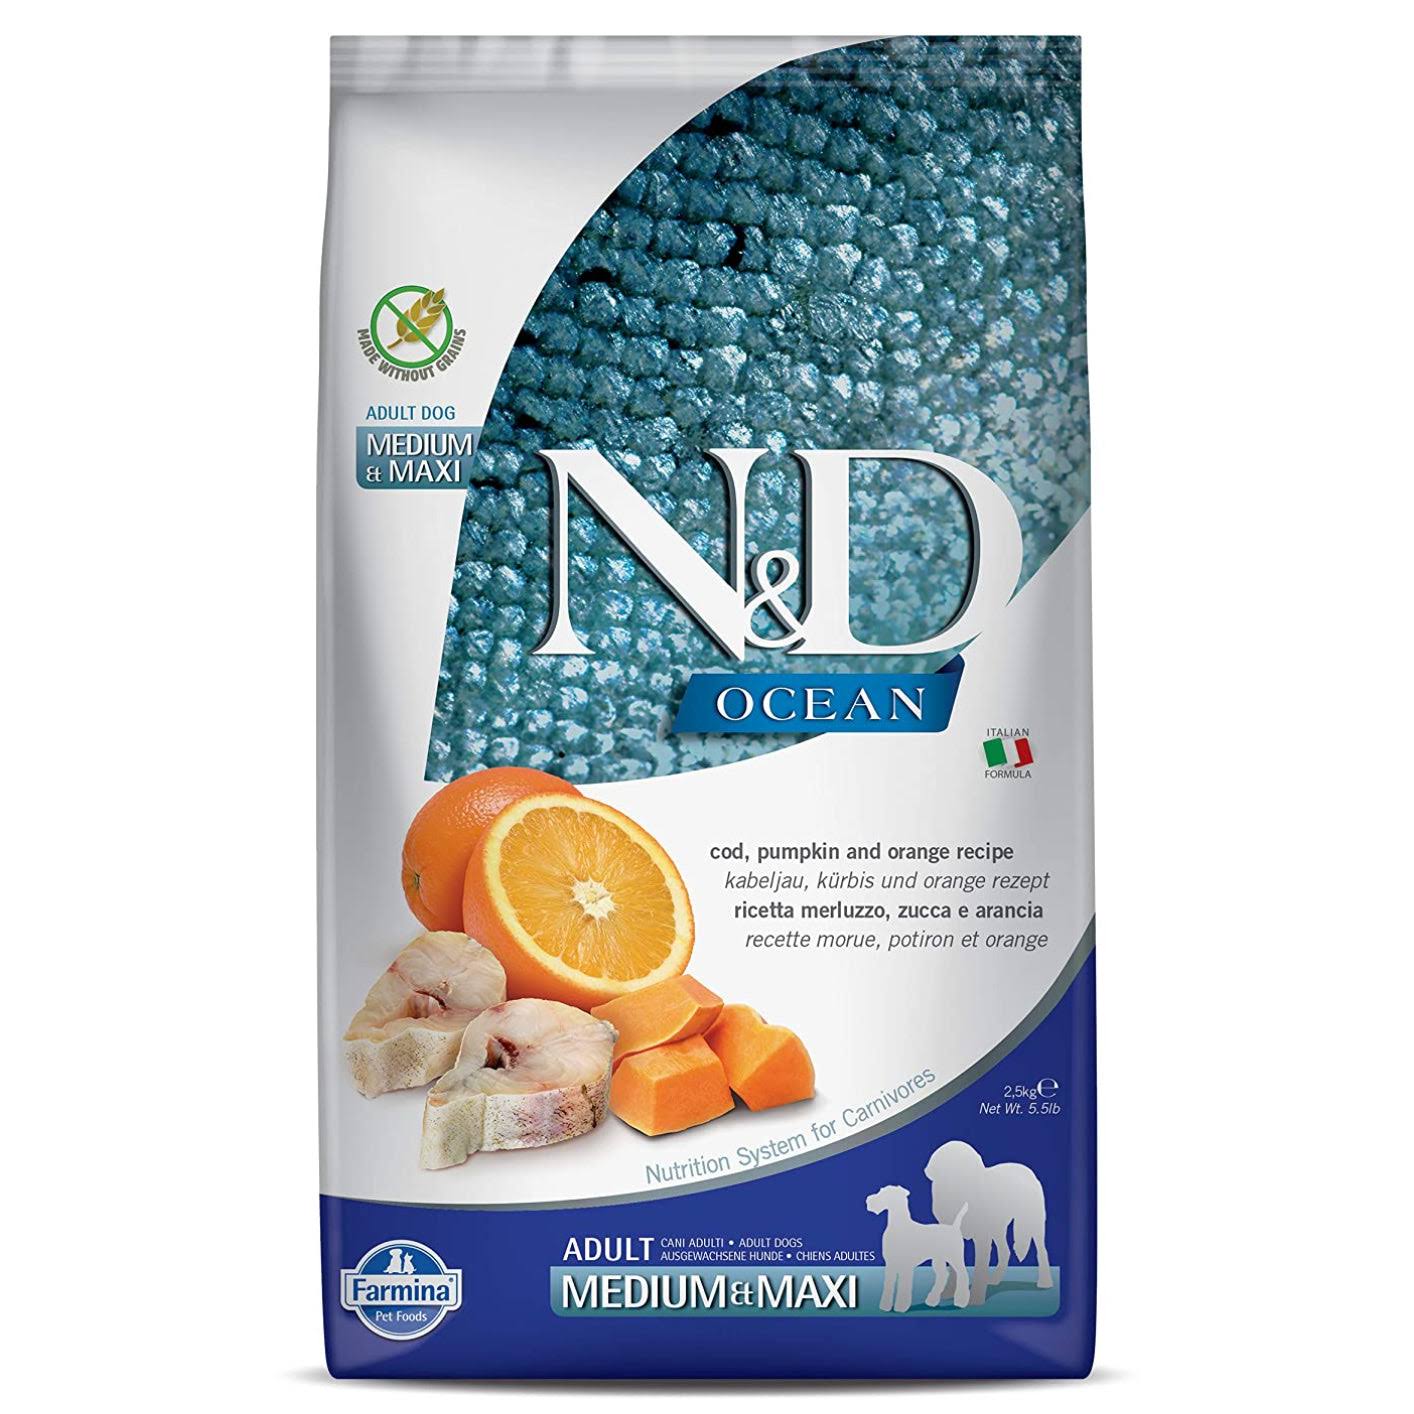 NandD Ocean Cod, Pumpkin and Orange Medium and Maxi Adult Dog Food - 12kg - Farmina